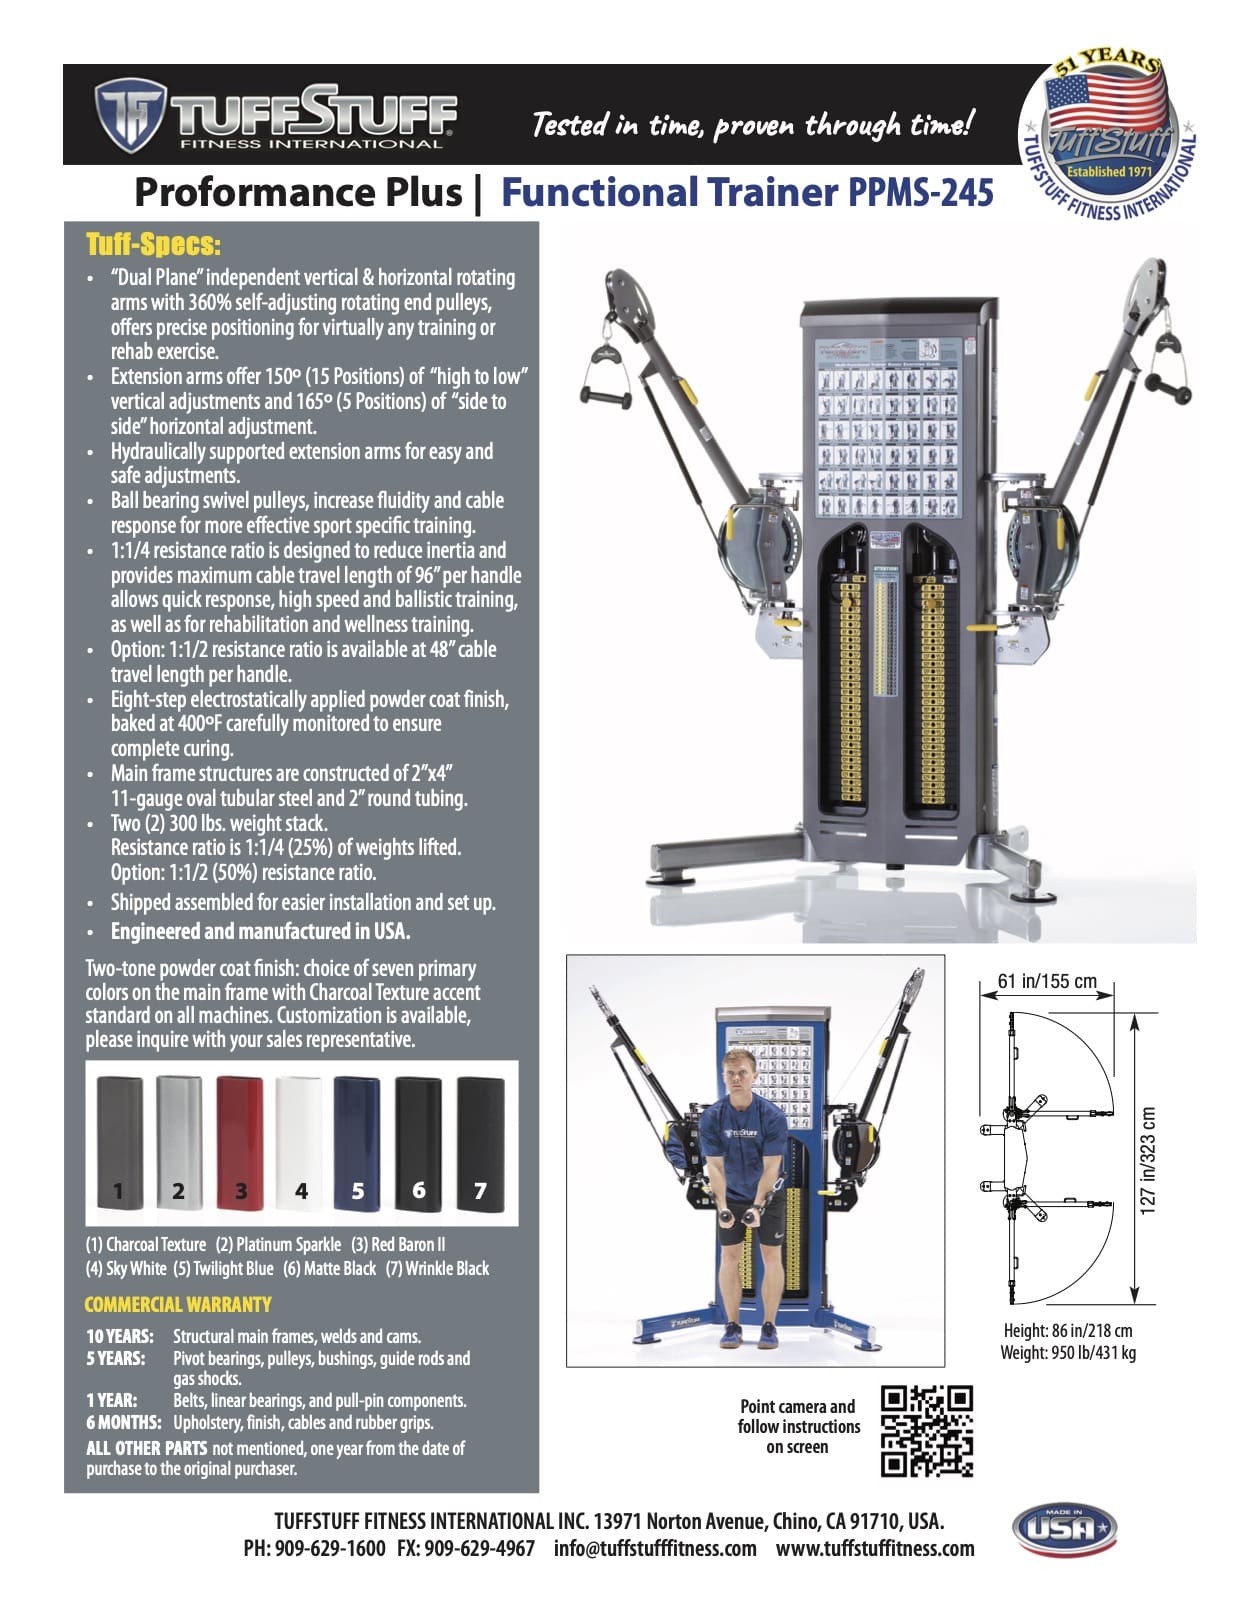 TuffStuff Proformance Plus Functional Trainer PPMS-245 - Spec Sheet